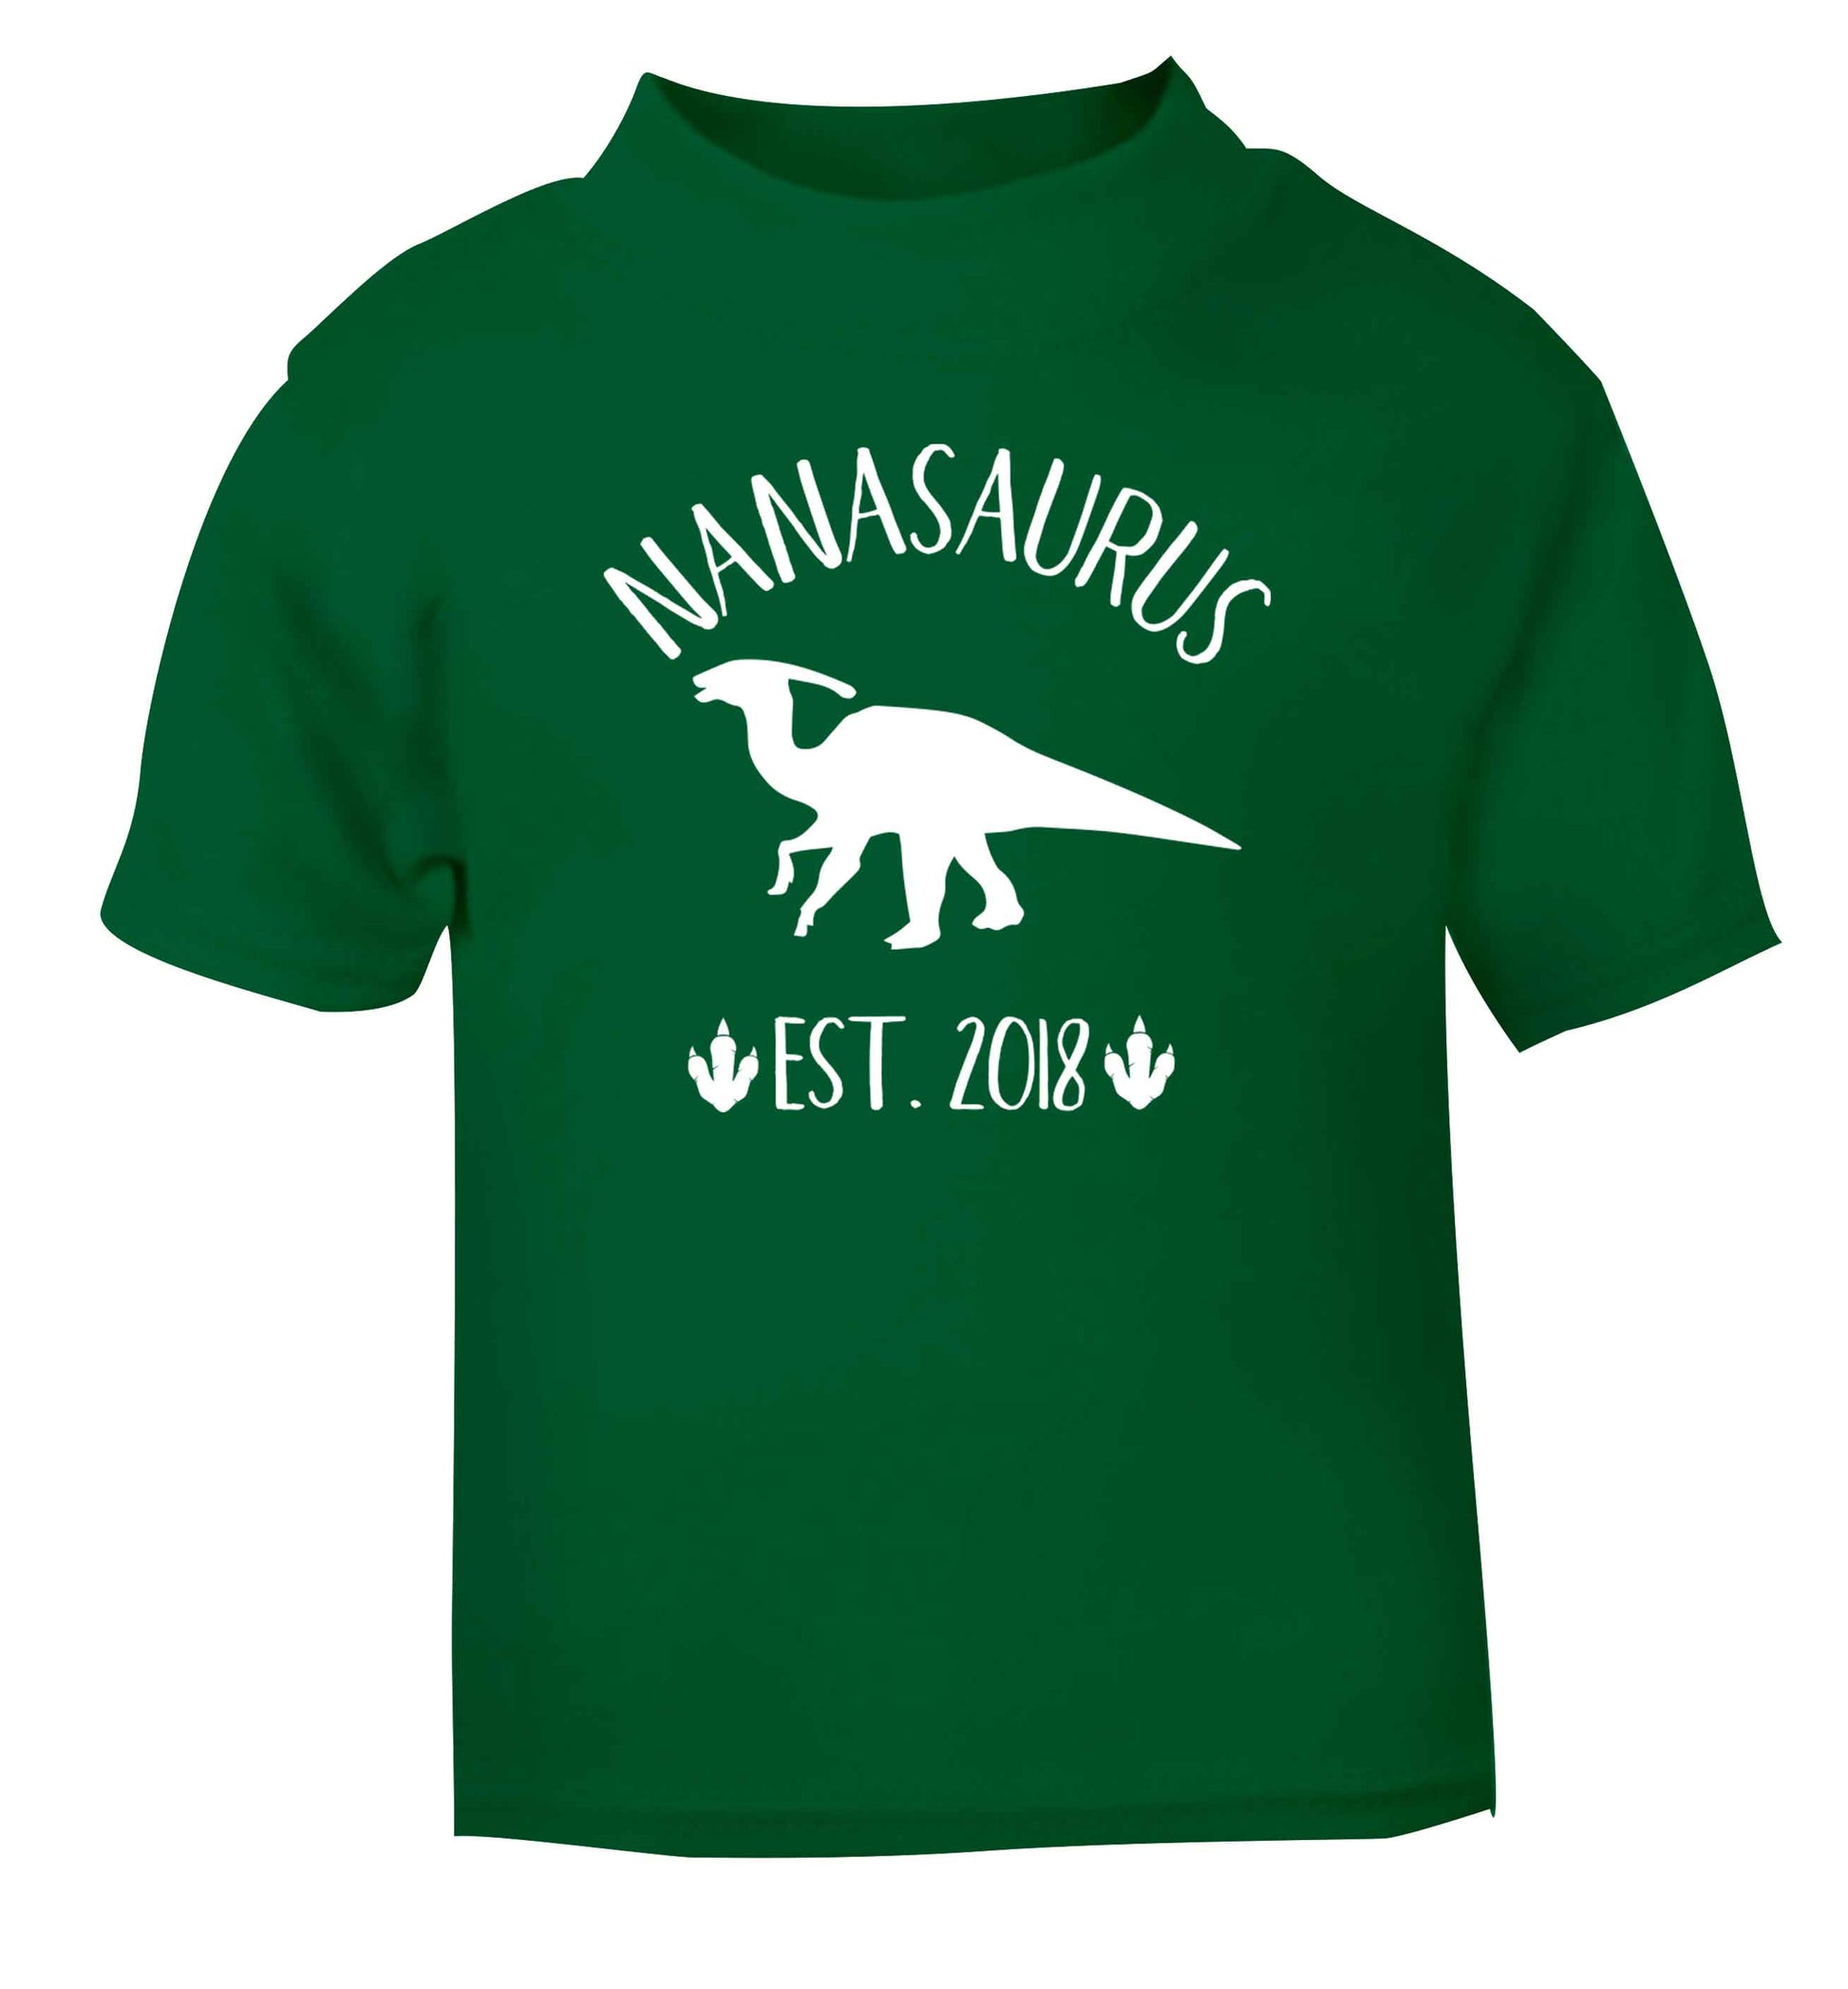 Personalised nanasaurus since (custom date) green Baby Toddler Tshirt 2 Years